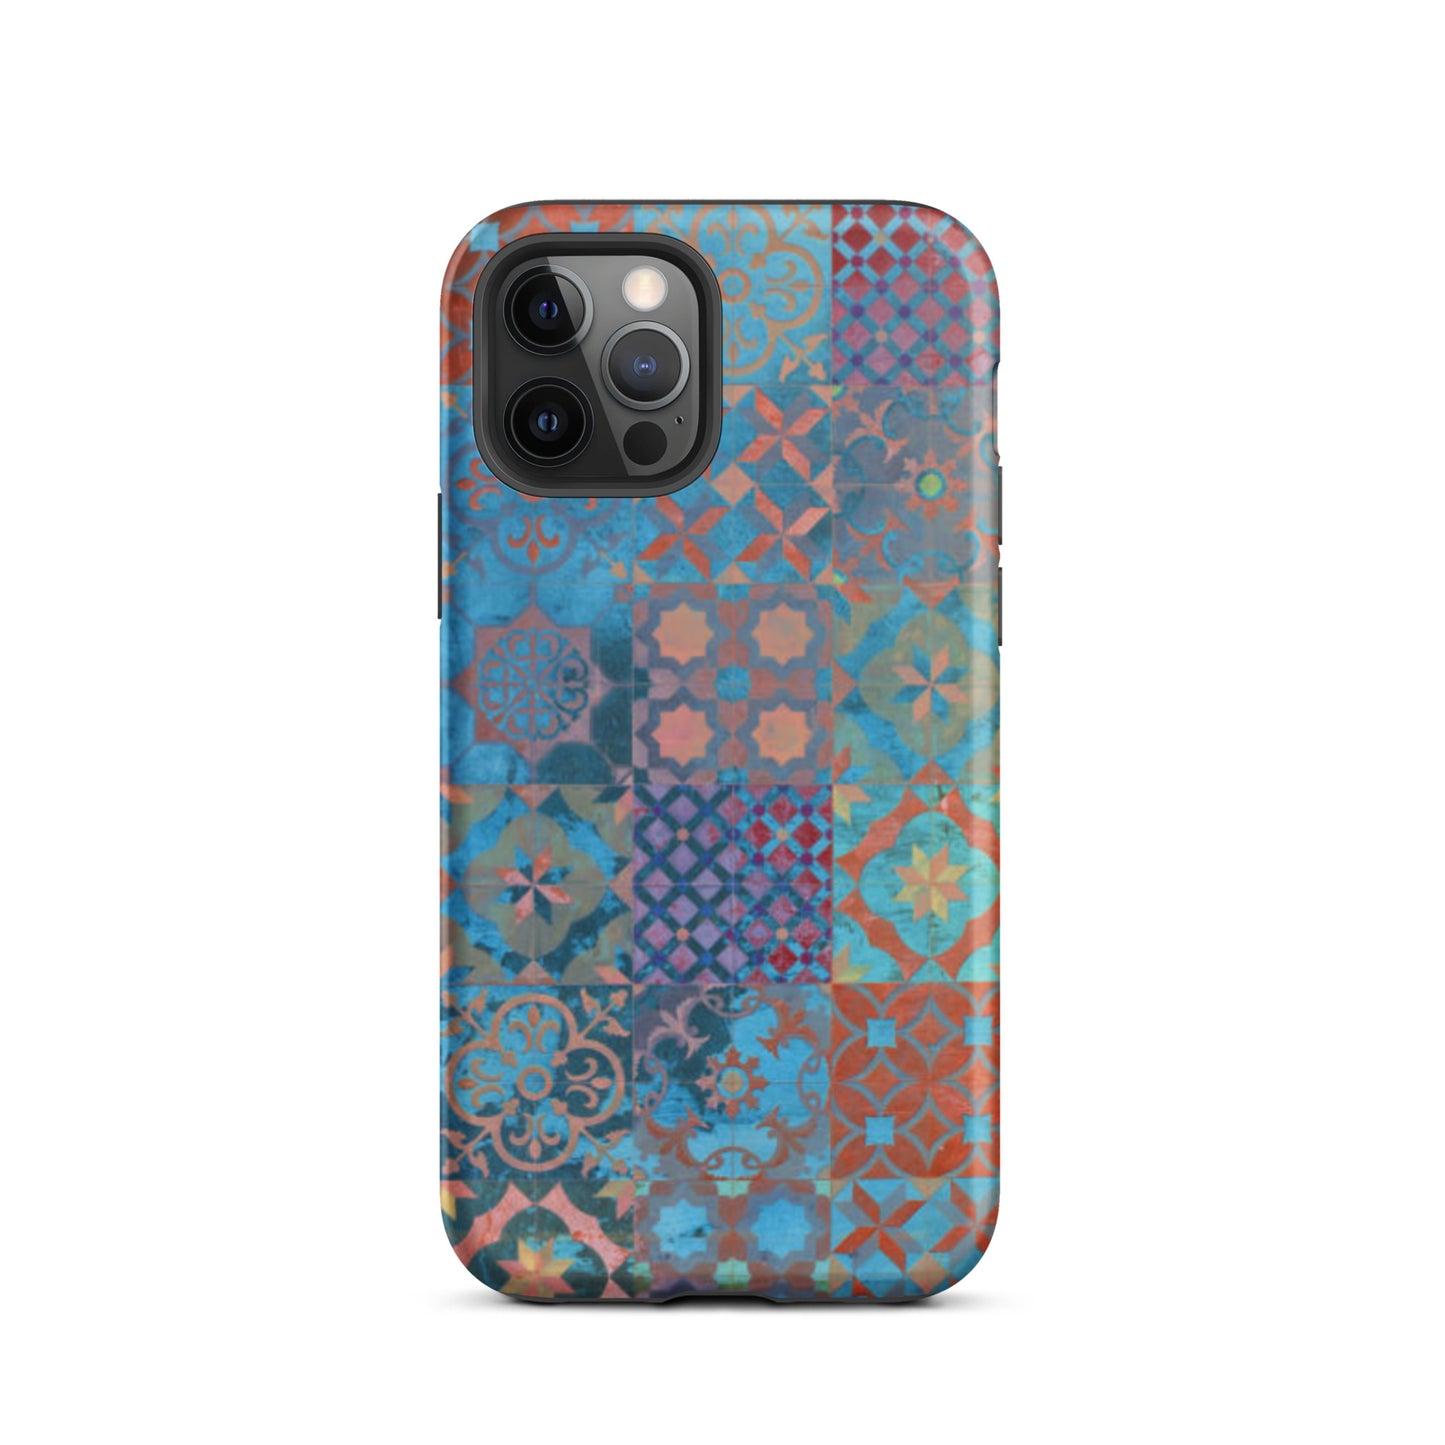 Moroccan Tile Tough iPhone 12 Pro case